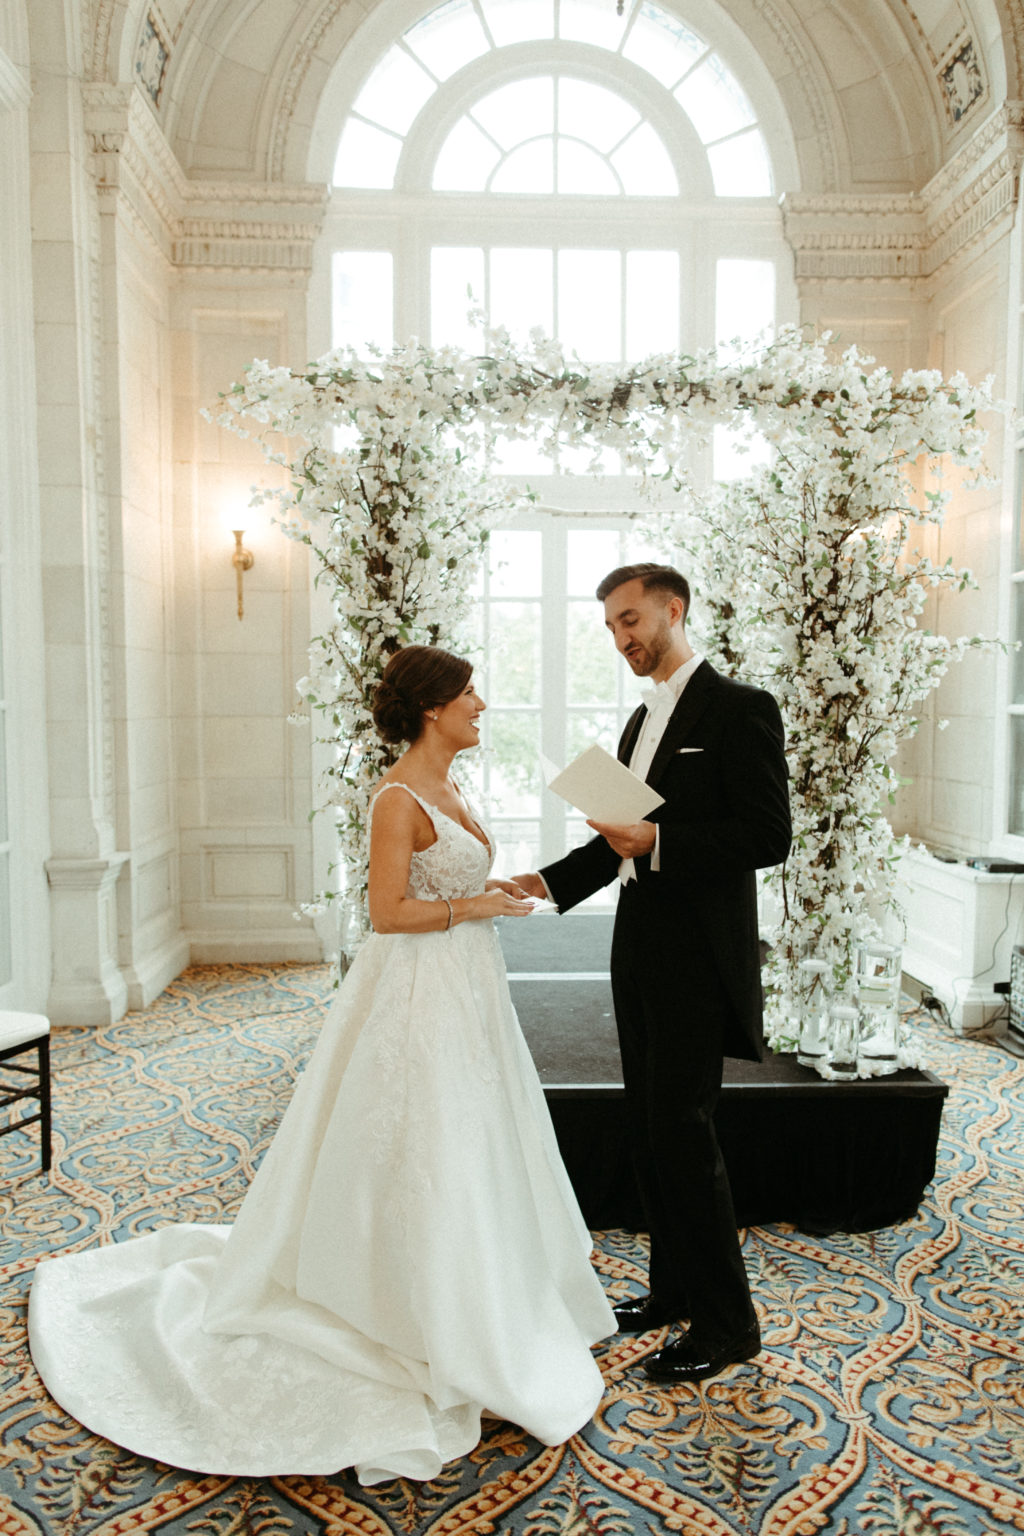 The Zadrozny’s Wedding At The Hermitage Hotel | elizabethevents.com